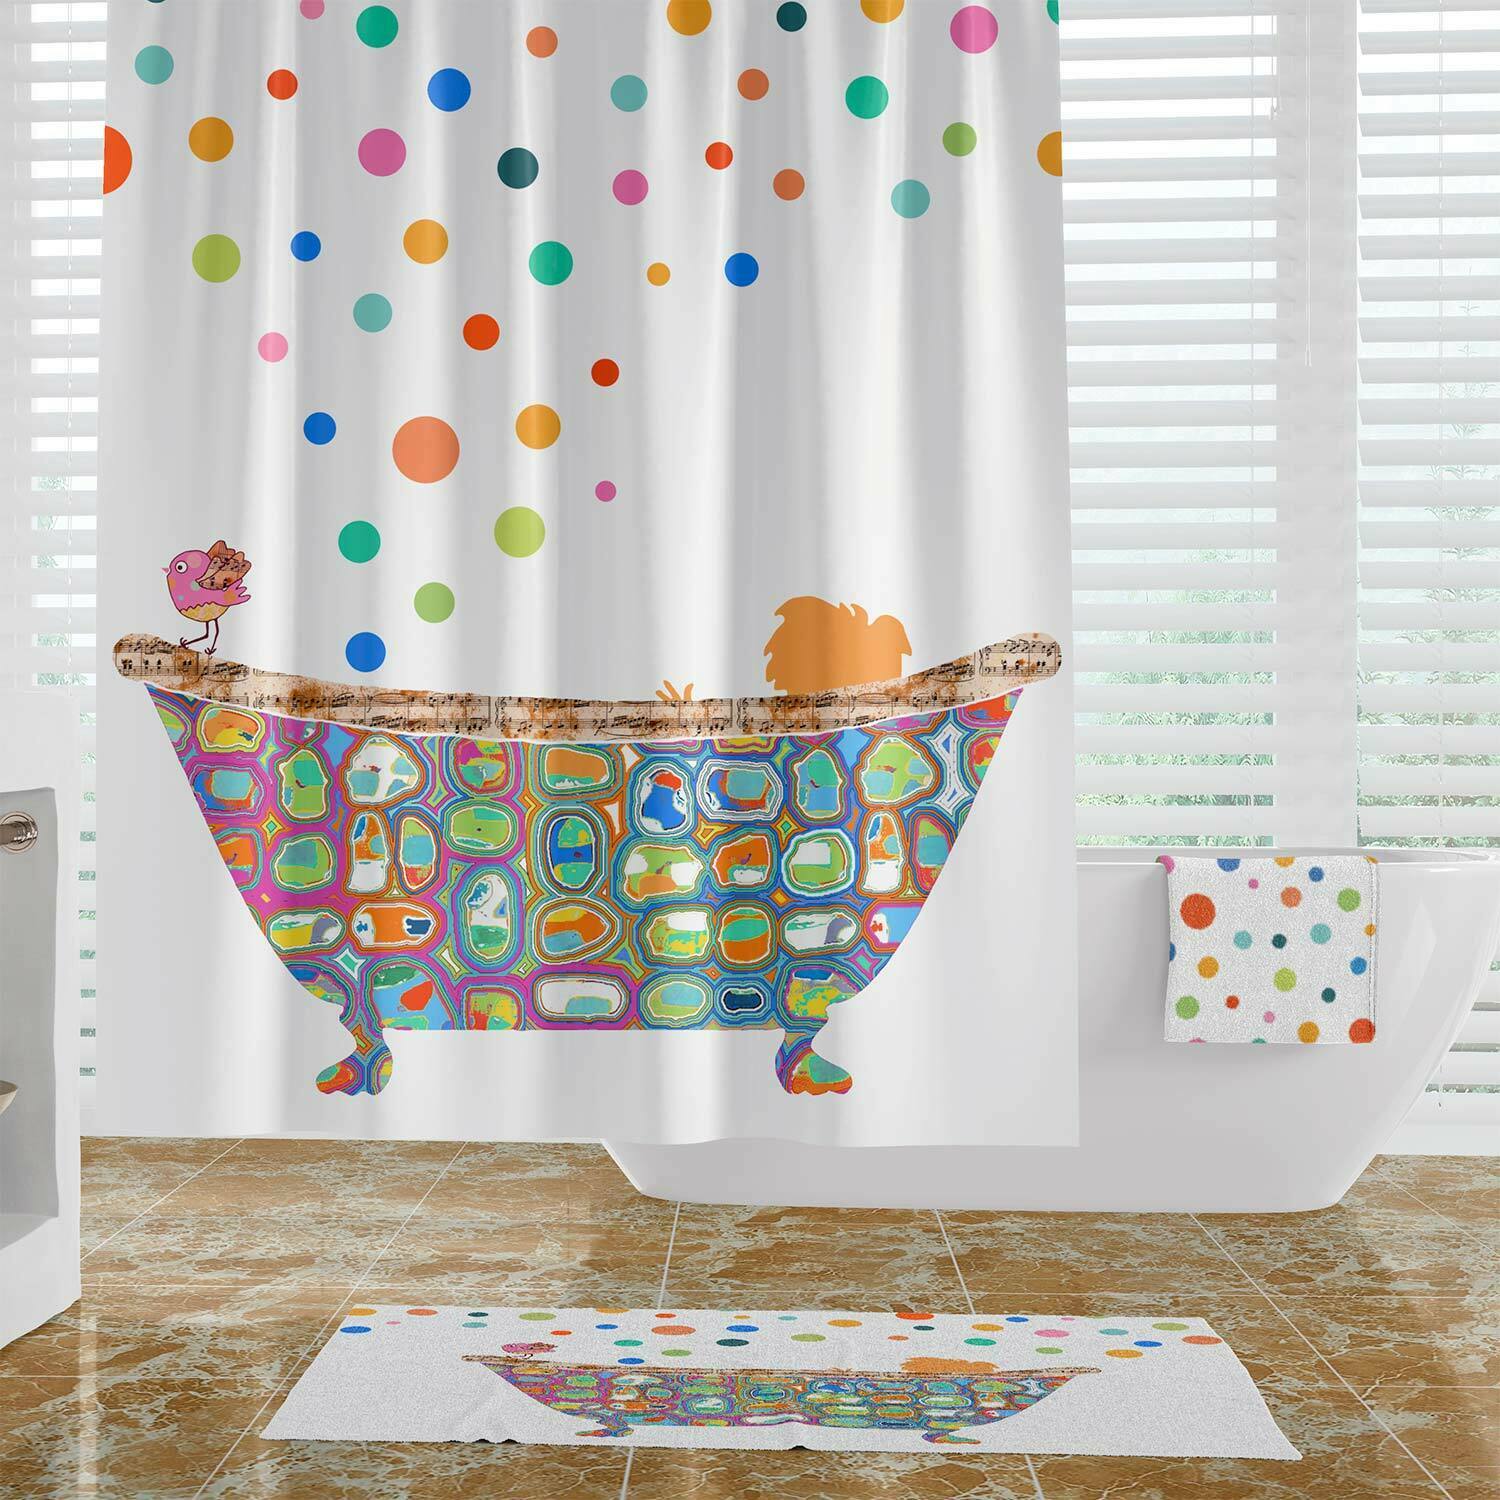 Playful Polka Dot Child in a Bathtub Shower Curtain for Kids' Bathroom Decor